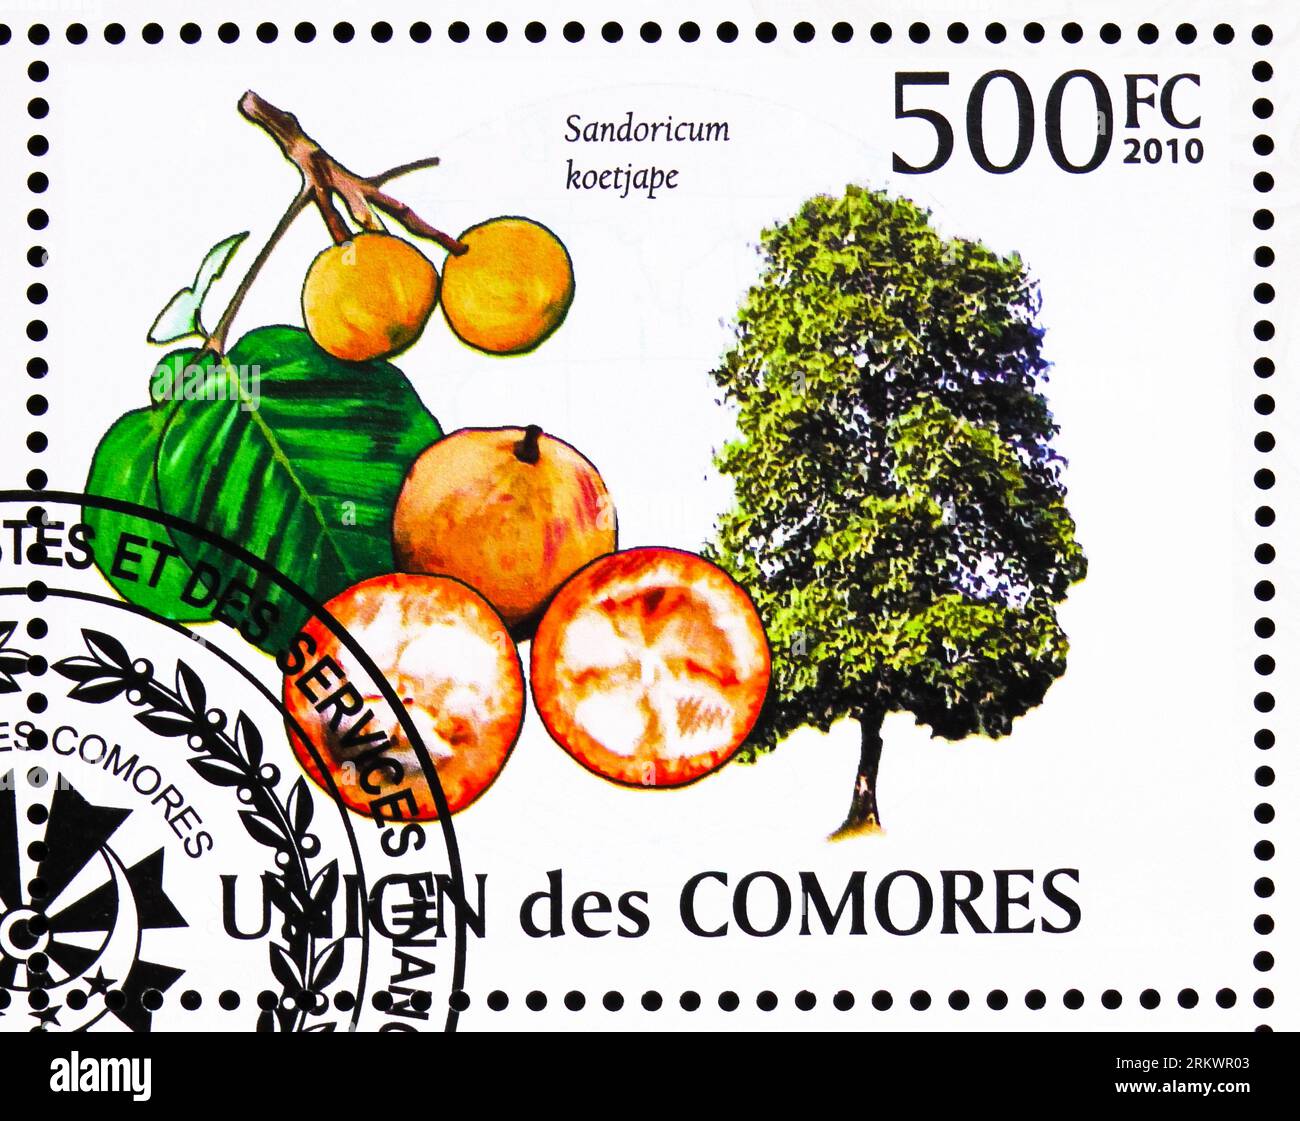 MOSCOW, RUSSIA - JULY 12, 2022: Postage stamp printed in Comoros shows Santol (Sandoricum koetjape), Fruits serie, circa 2009 Stock Photo